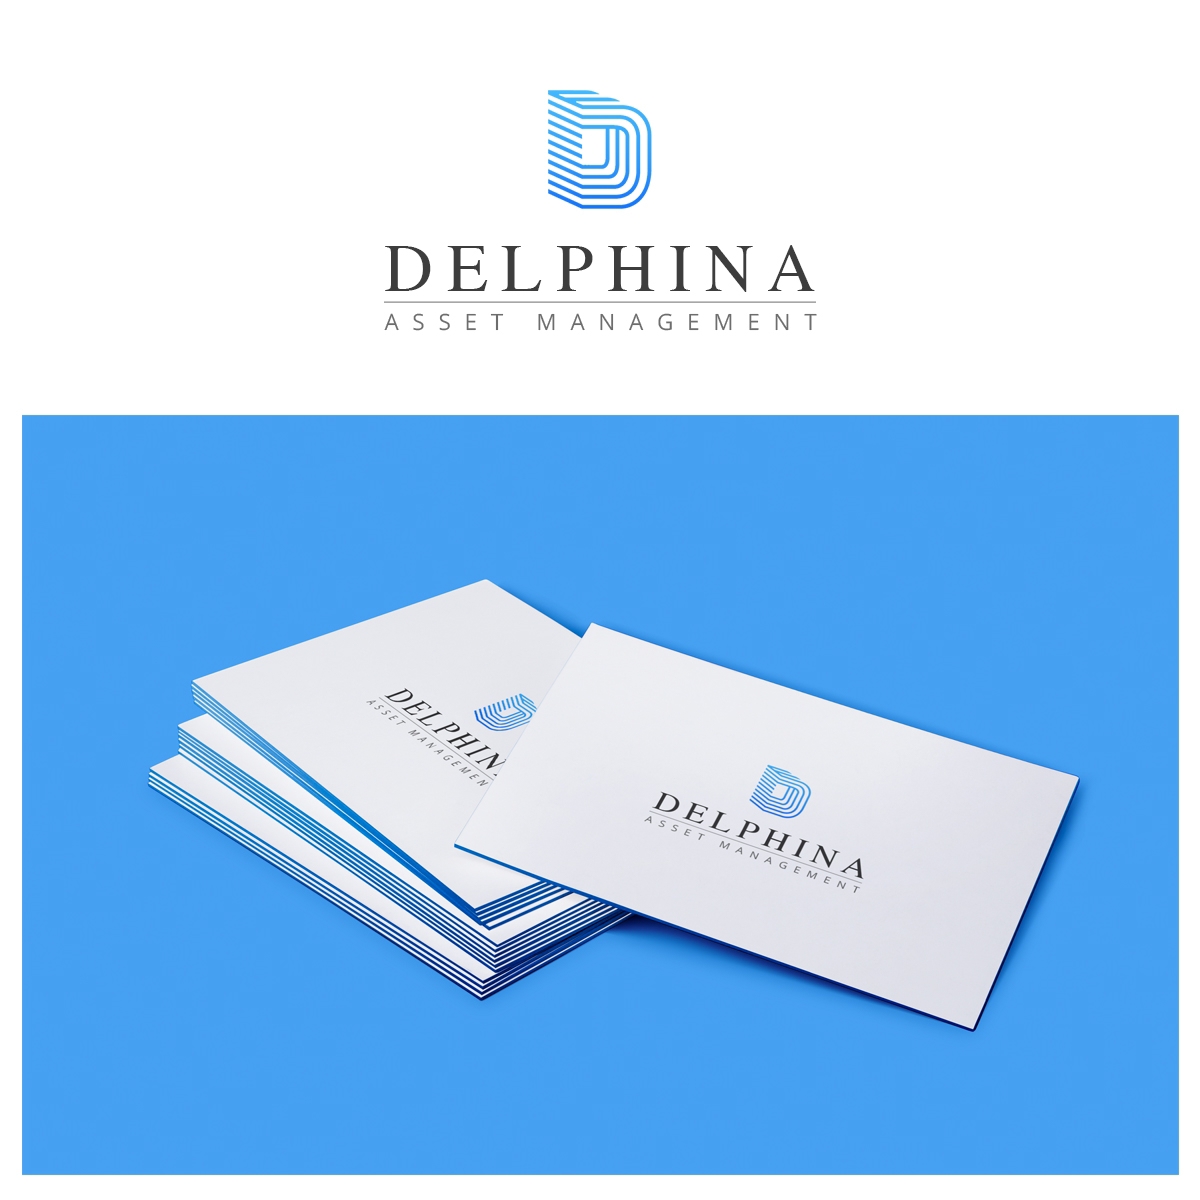 Delphina Asset Management 99Designs logocontest